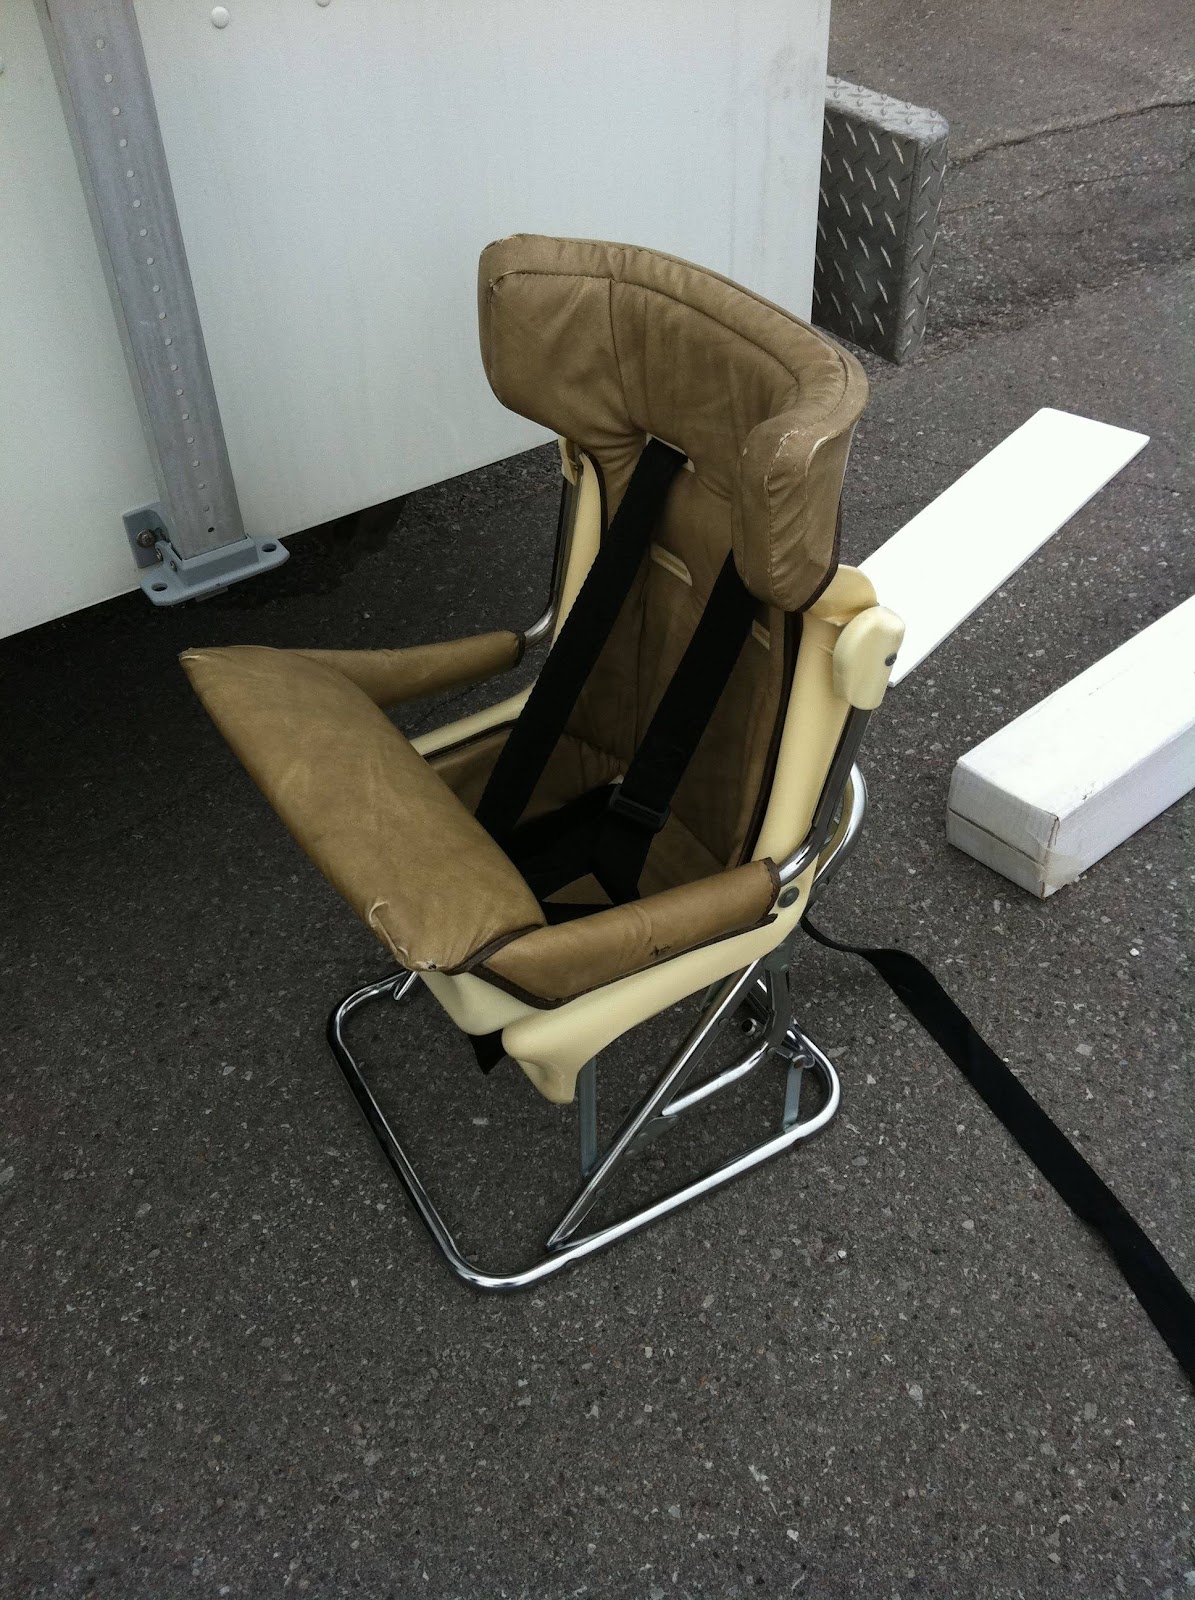 Vintage Infantseat rocker, not a car seat Vintage car